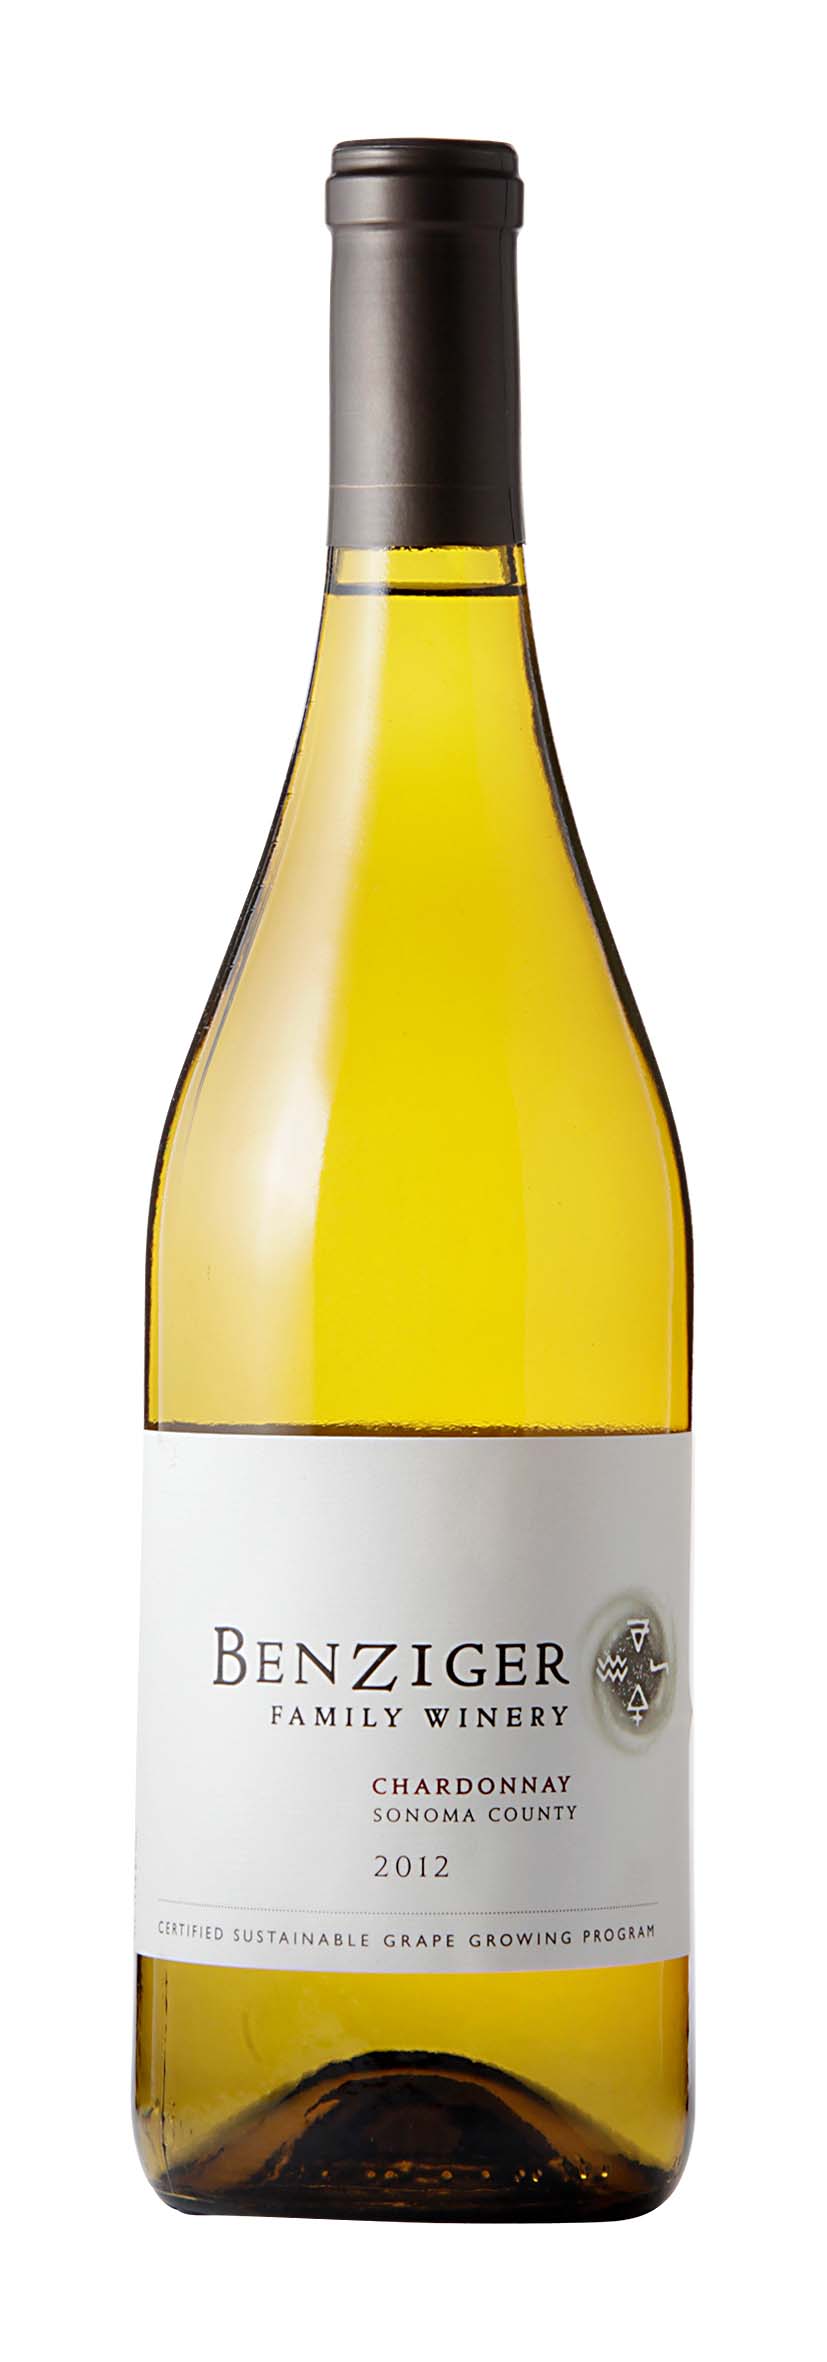 Sonoma County Chardonnay 2012